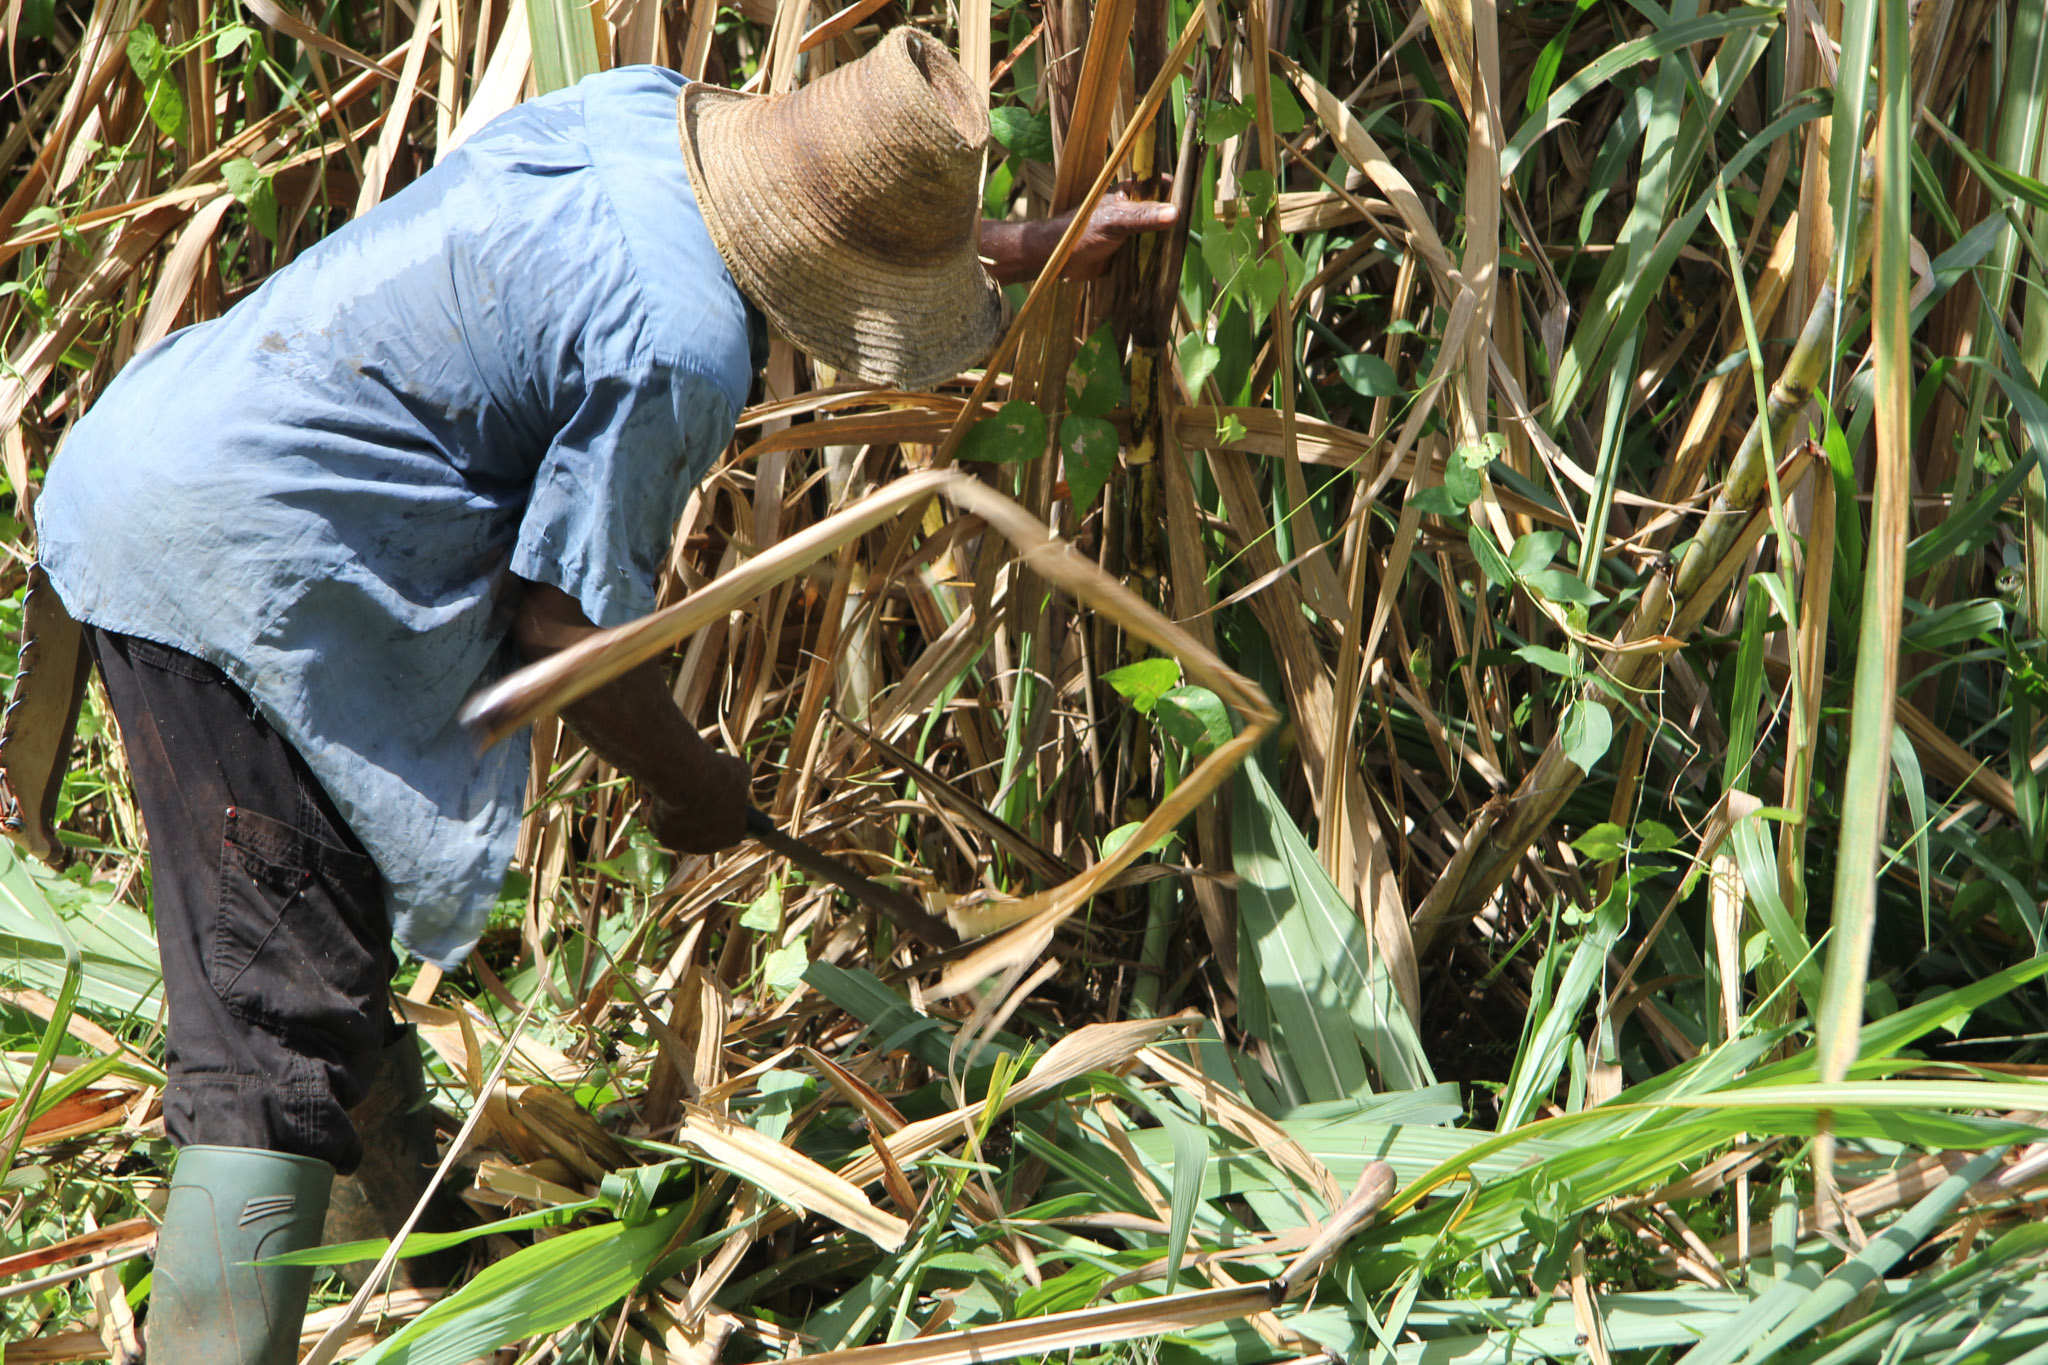 person cutting down sugar cane in the field